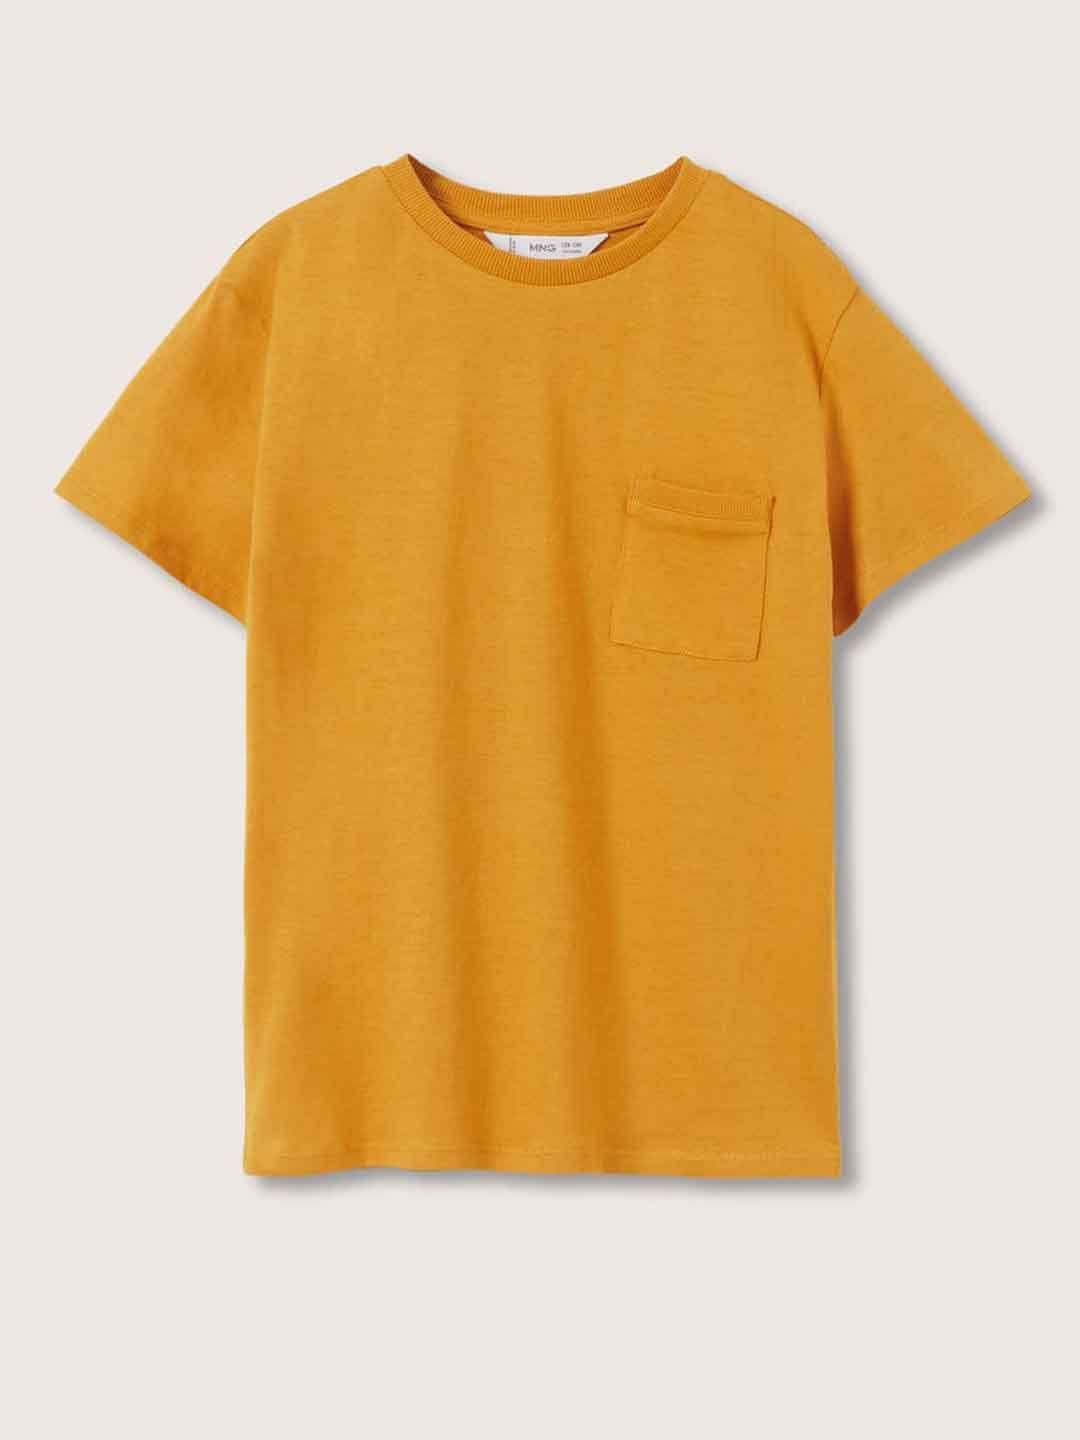 mango kids boys mustard yellow solid pure cotton t-shirt